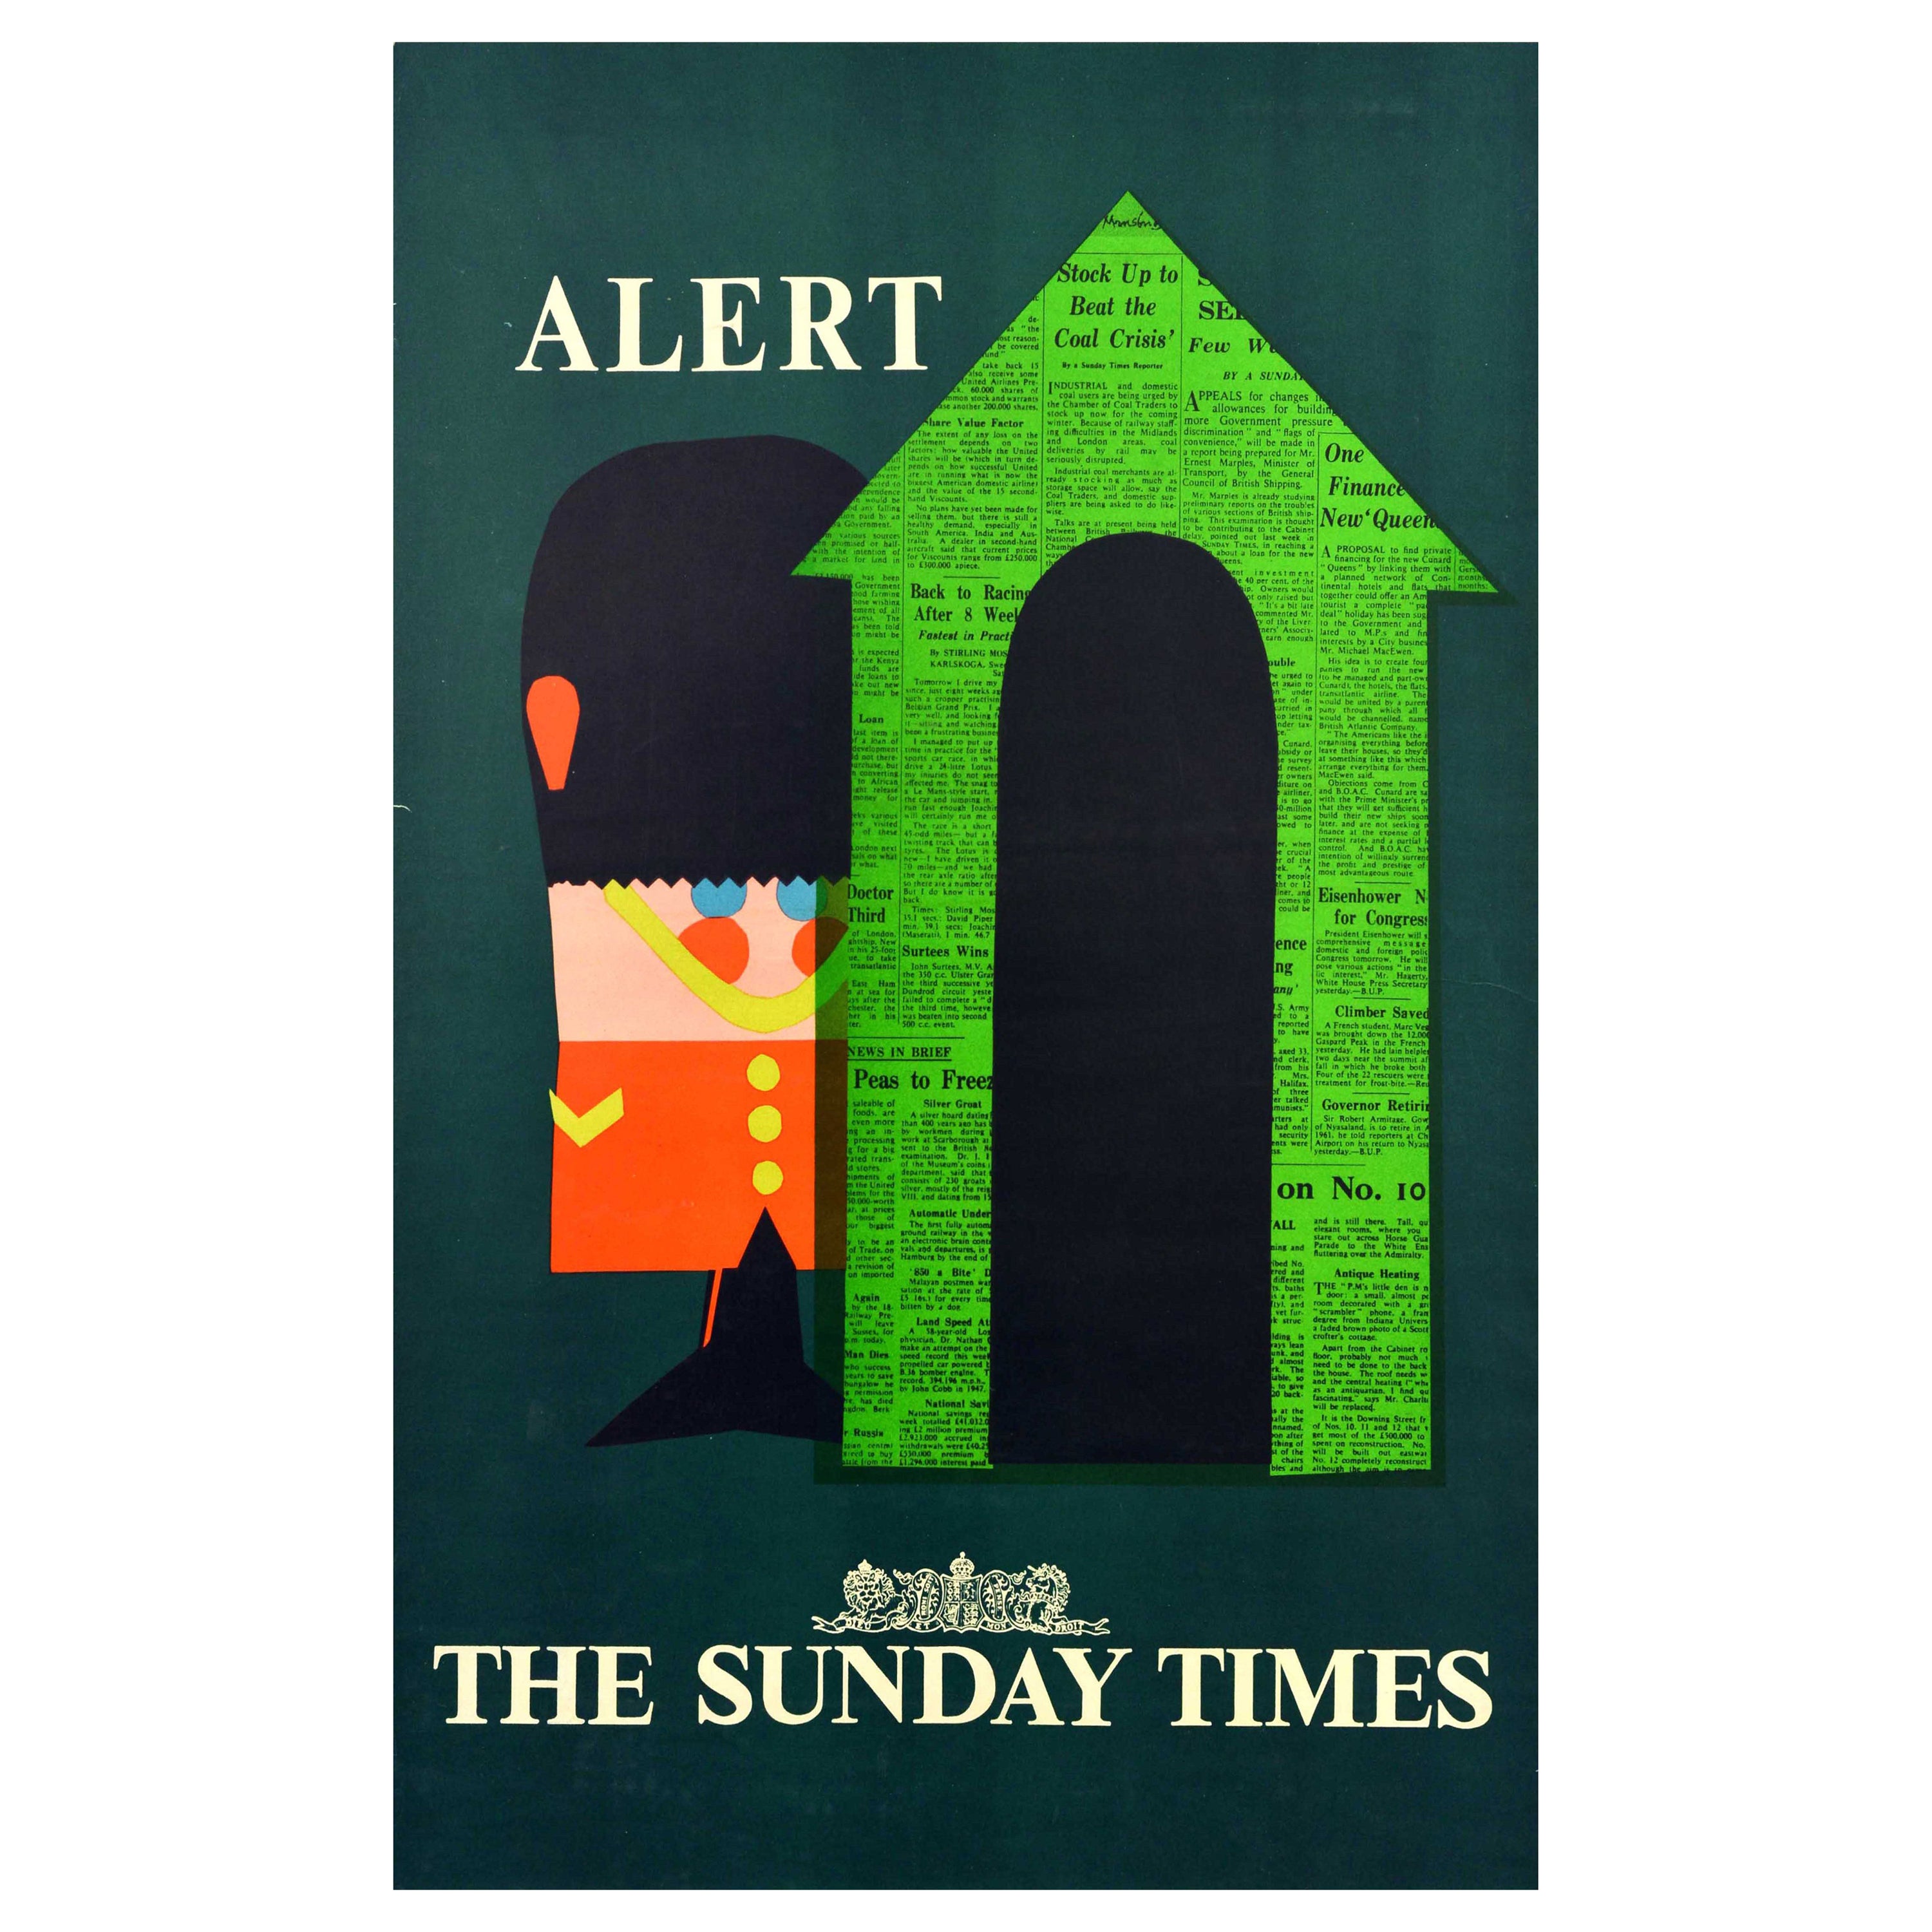 Original Vintage Poster Alert Sunday Times News Royal Guard Sentry Box Design